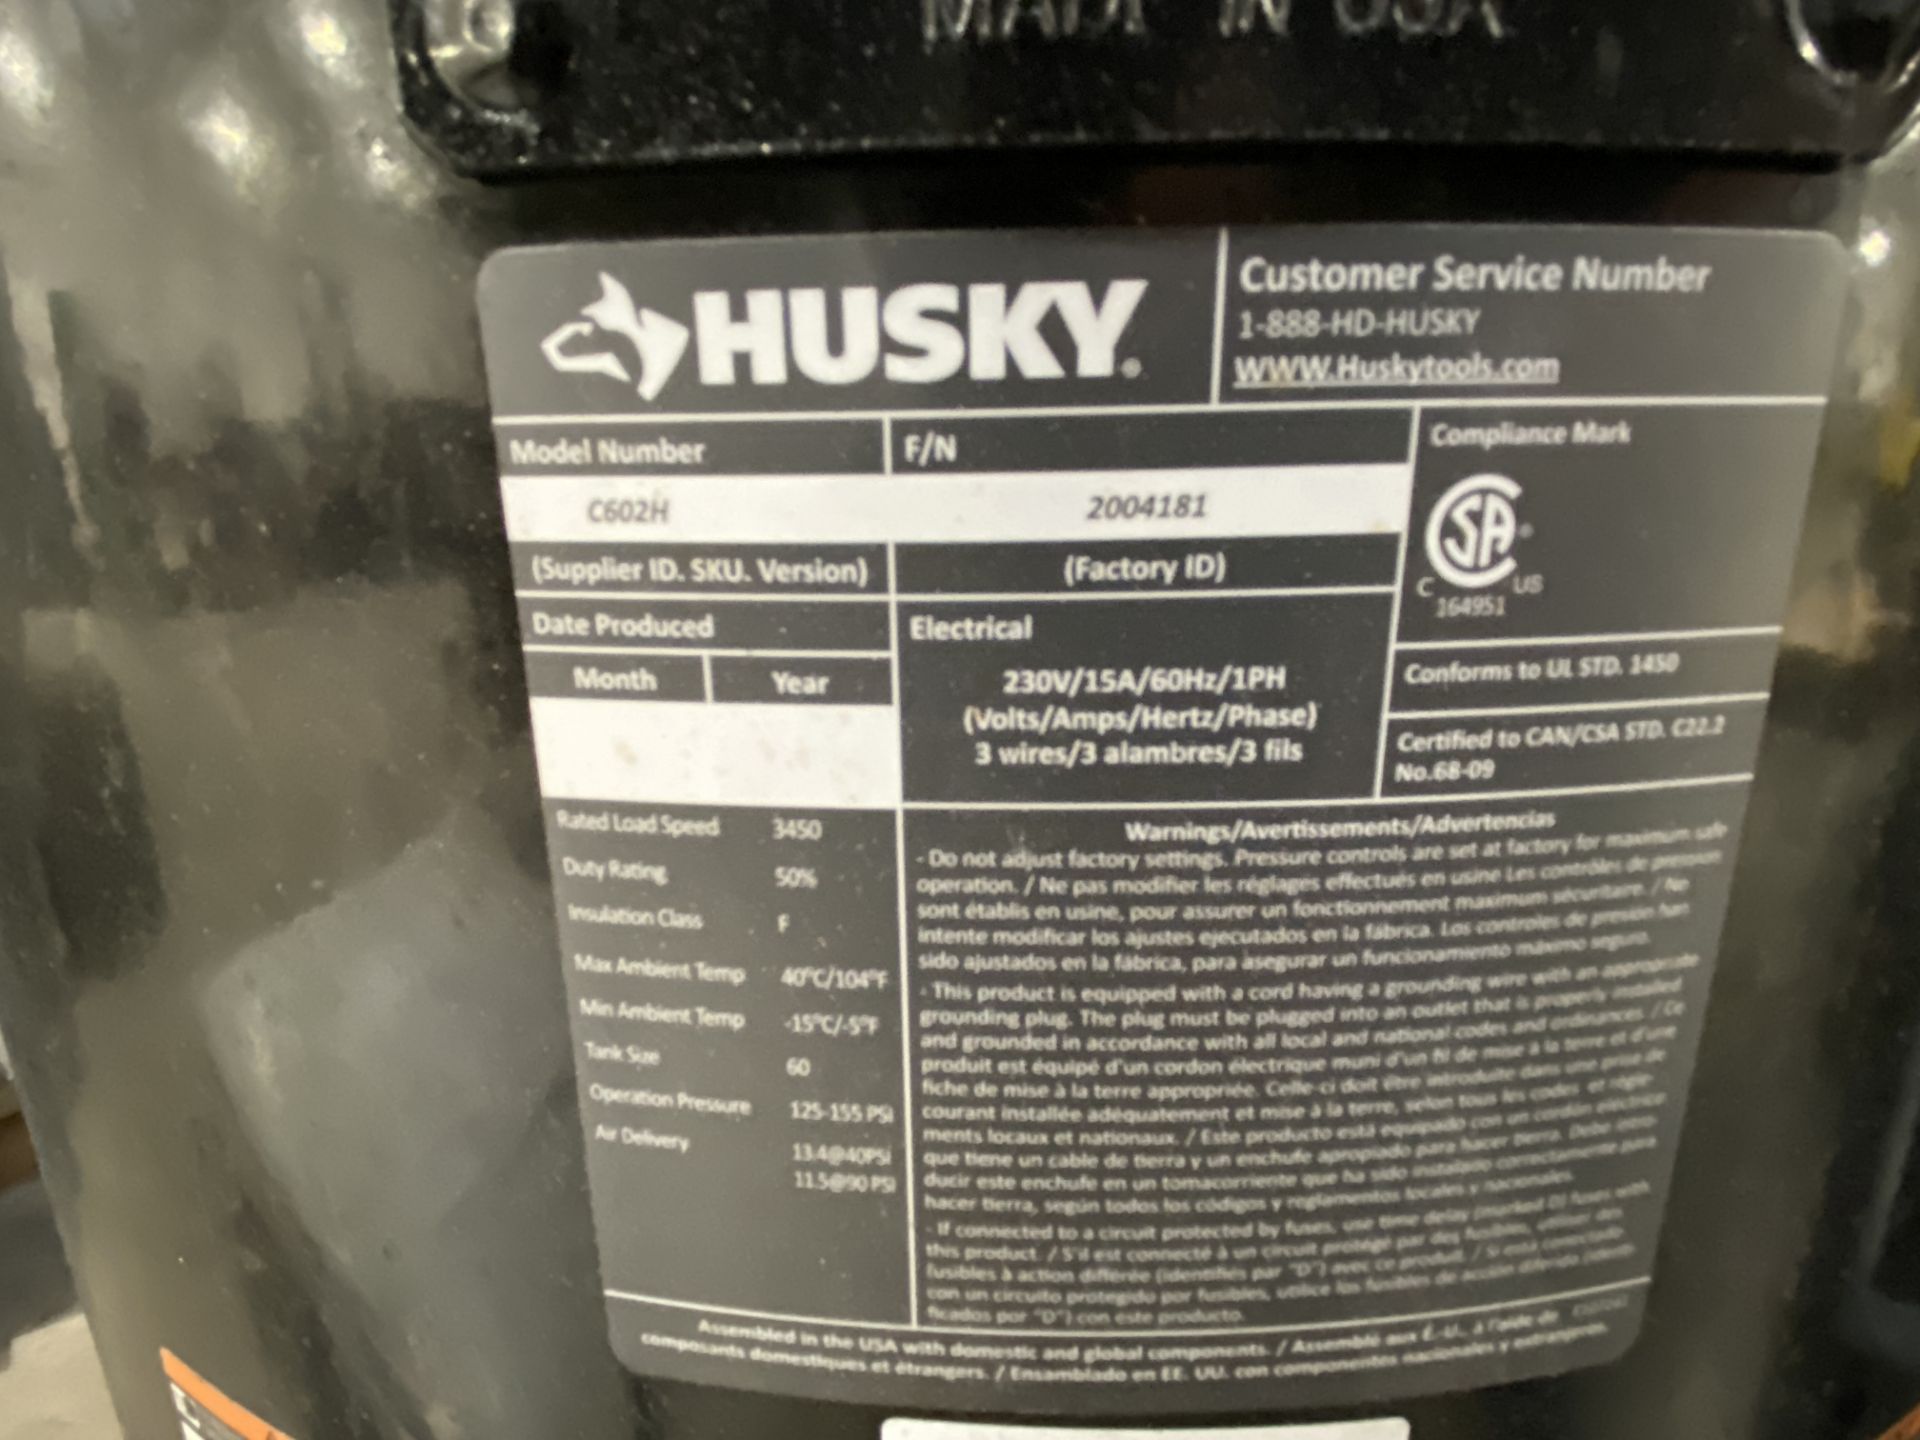 Husky C602H 4hp Vertical Tank Air Compressor, 2018 - Image 7 of 7